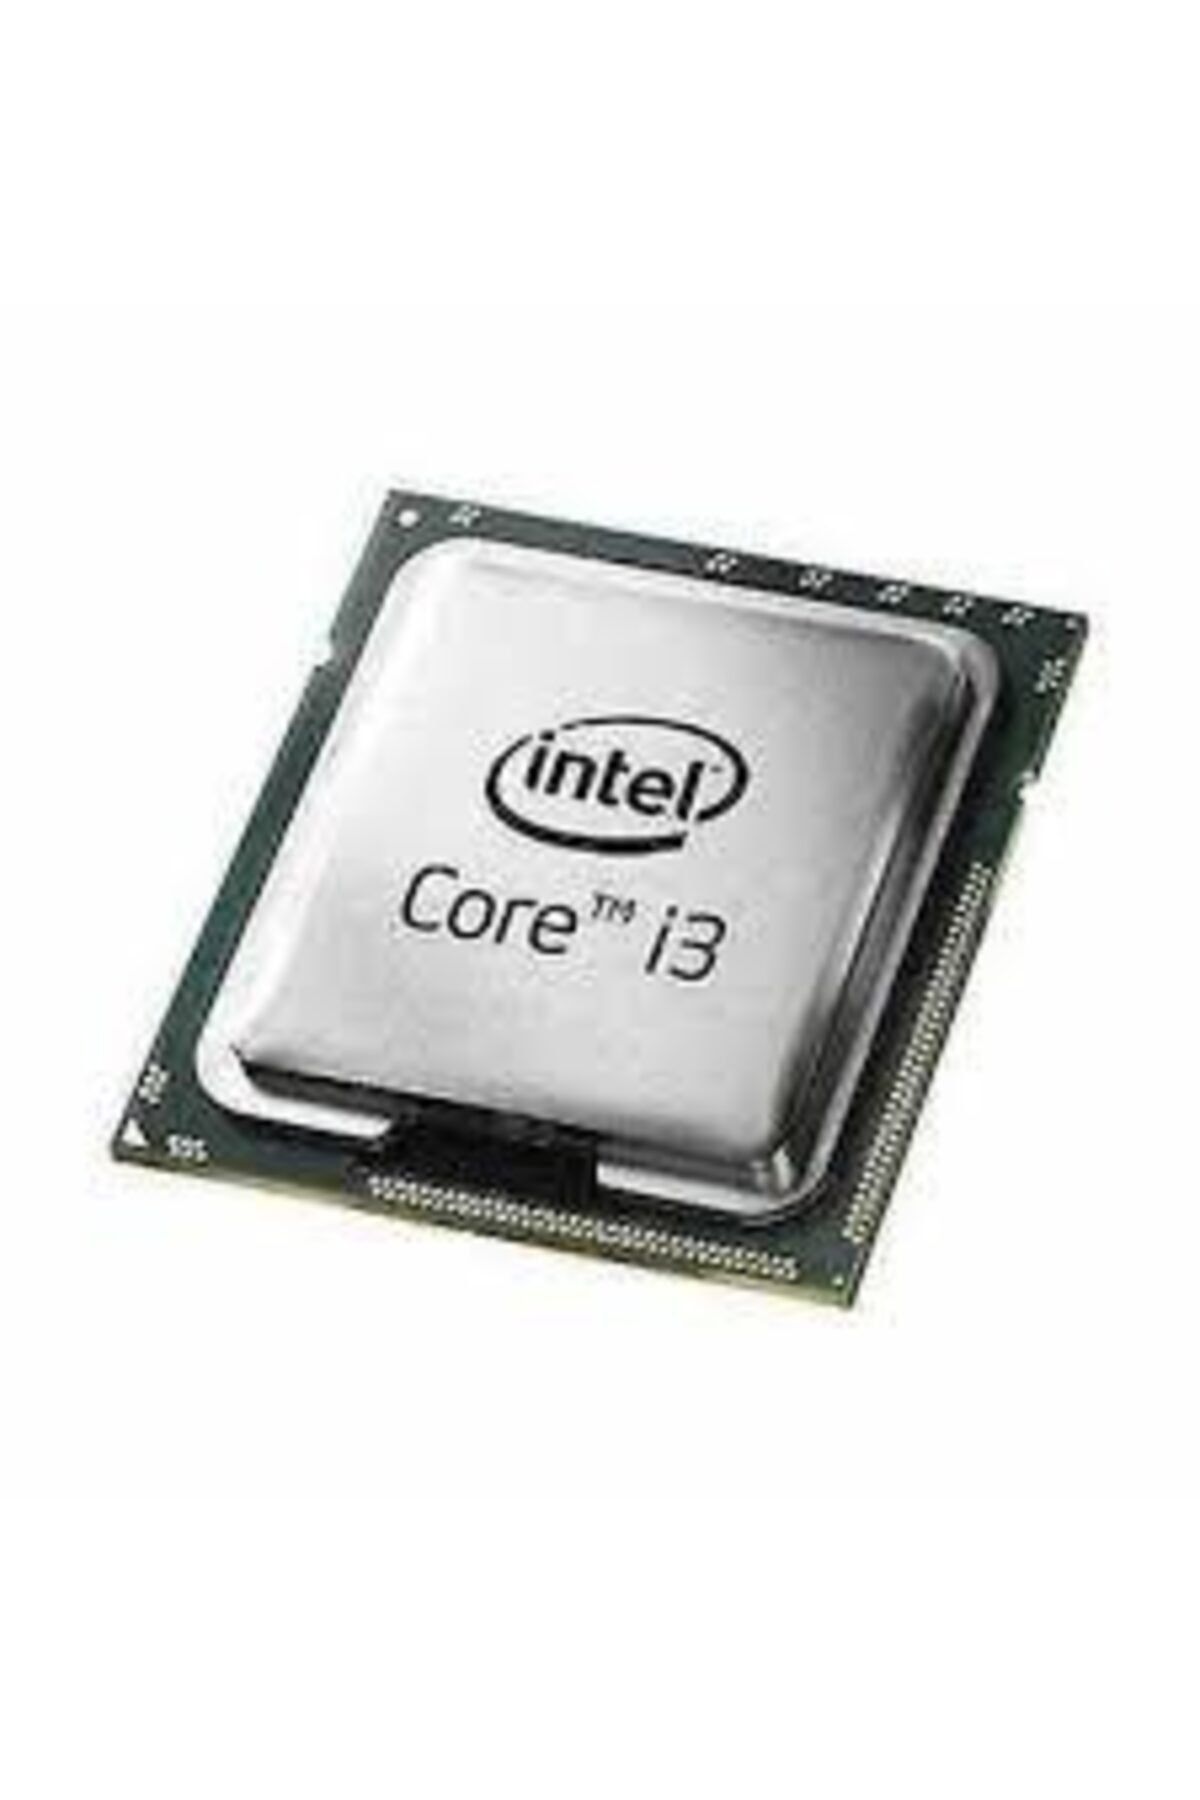 Intel Core I3 530 Tray Cpu 1156pin 2.93ghz 4mb Dual Core